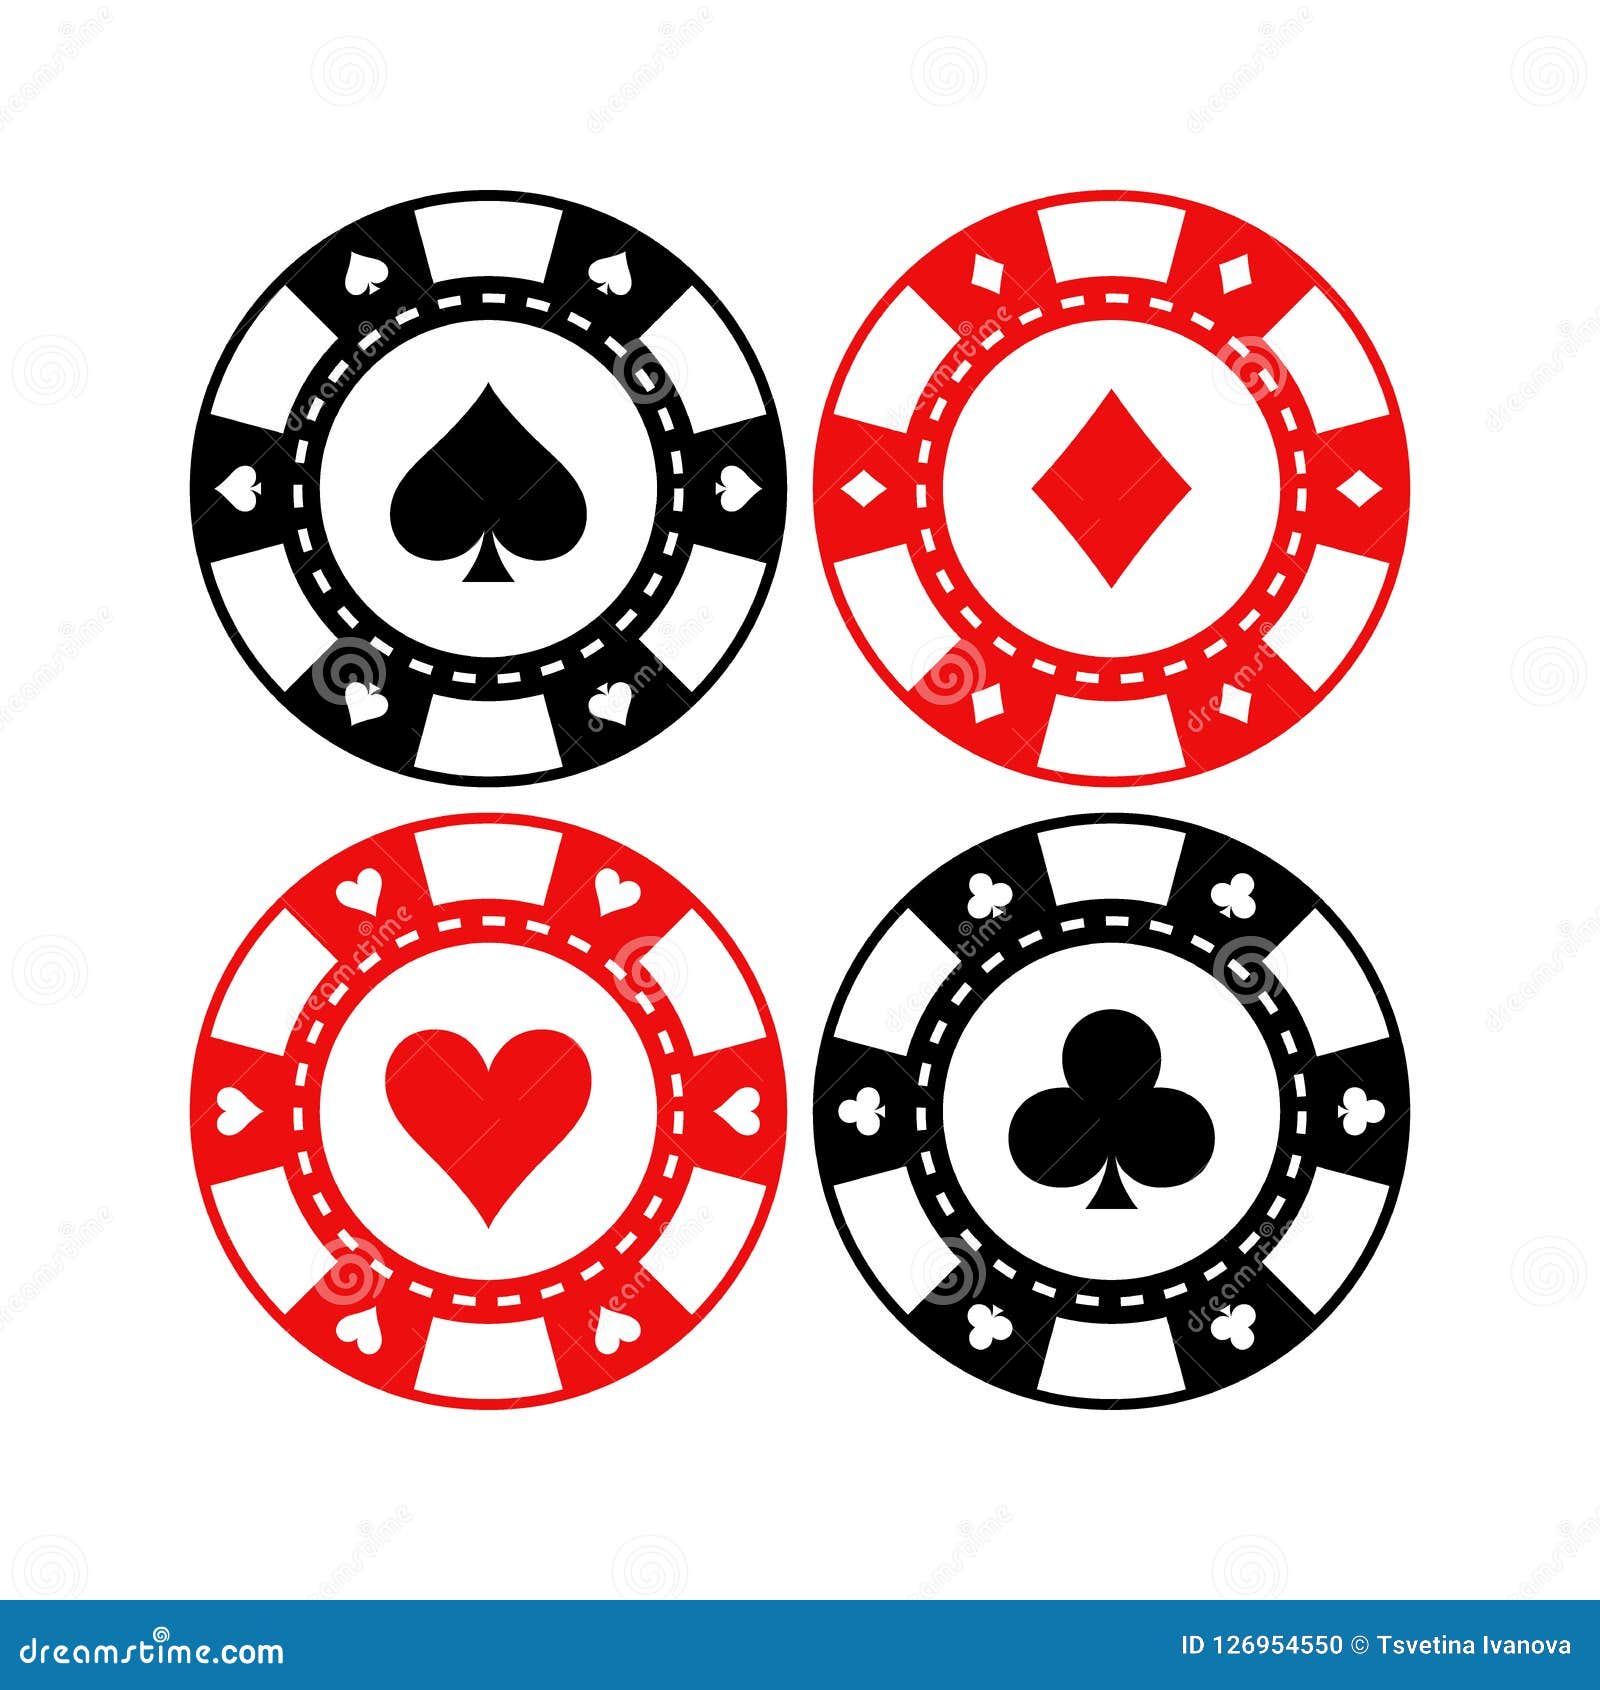 BACARDI RUM Poker Chip Set of 4 White Red Black Blue Casino Coin Token 